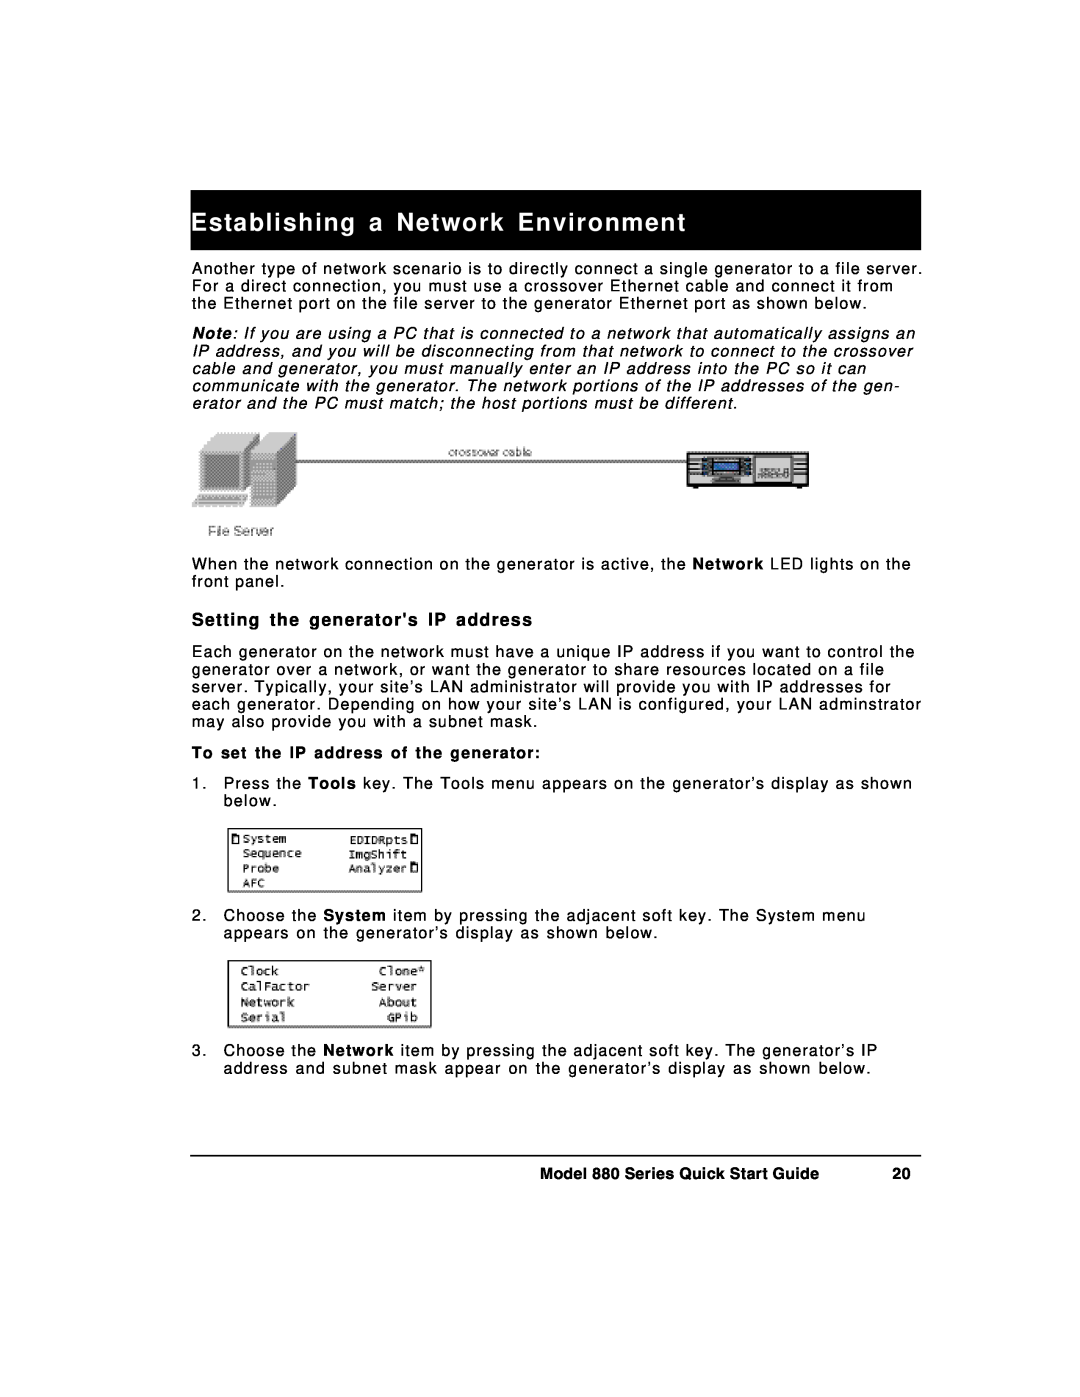 Quantum Data Establishing a Network Environment, Setting the generators IP address, Model 880 Series Quick Start Guide 